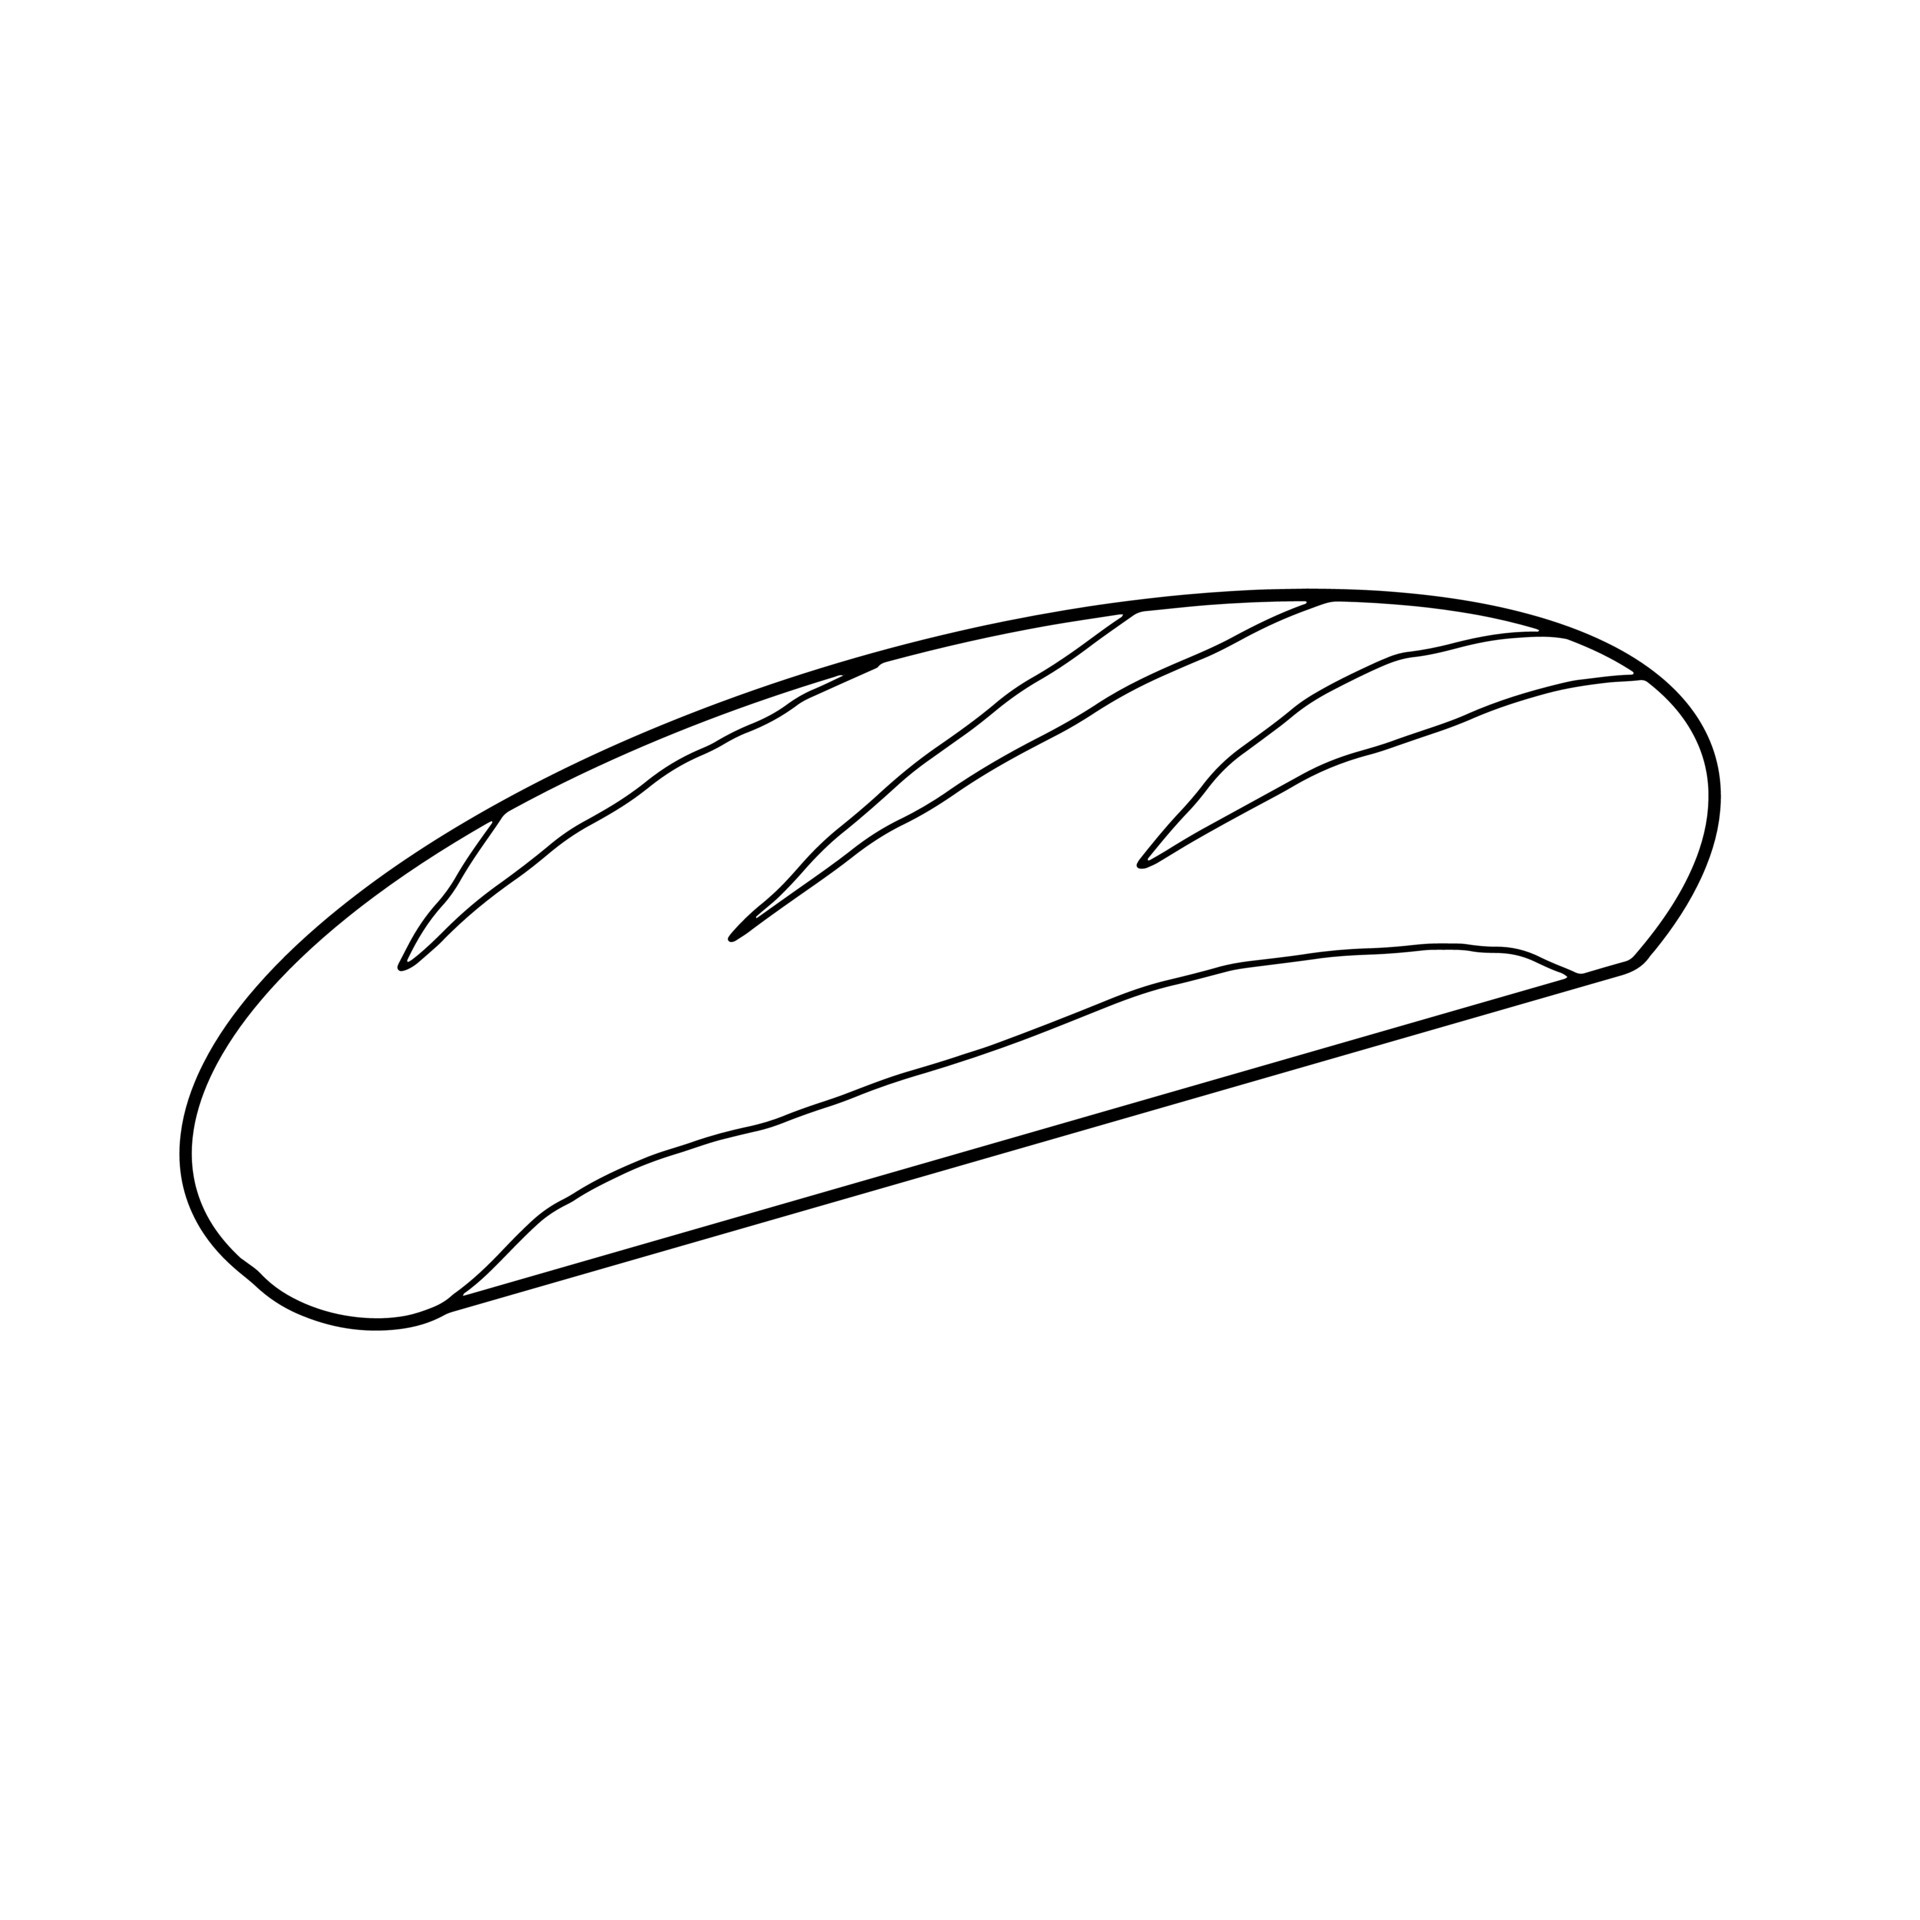 Baguette Bakery Bread Food Hand drawn Doodle 6870344 Vector Art at Vecteezy